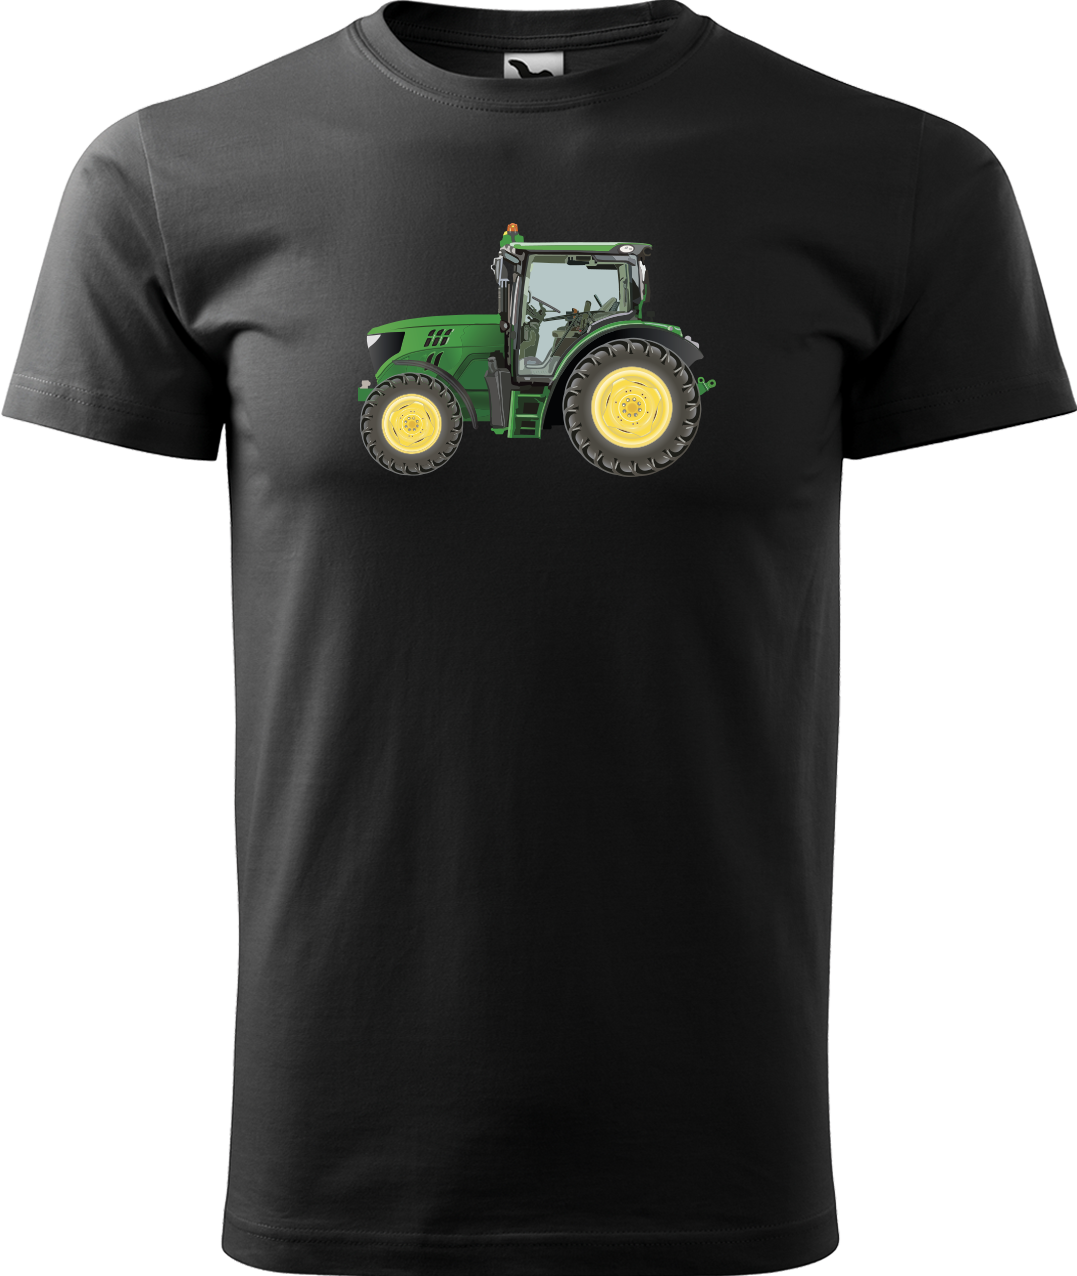 Tričko s traktorem - Zelený traktor Velikost: 3XL, Barva: Černá (01)